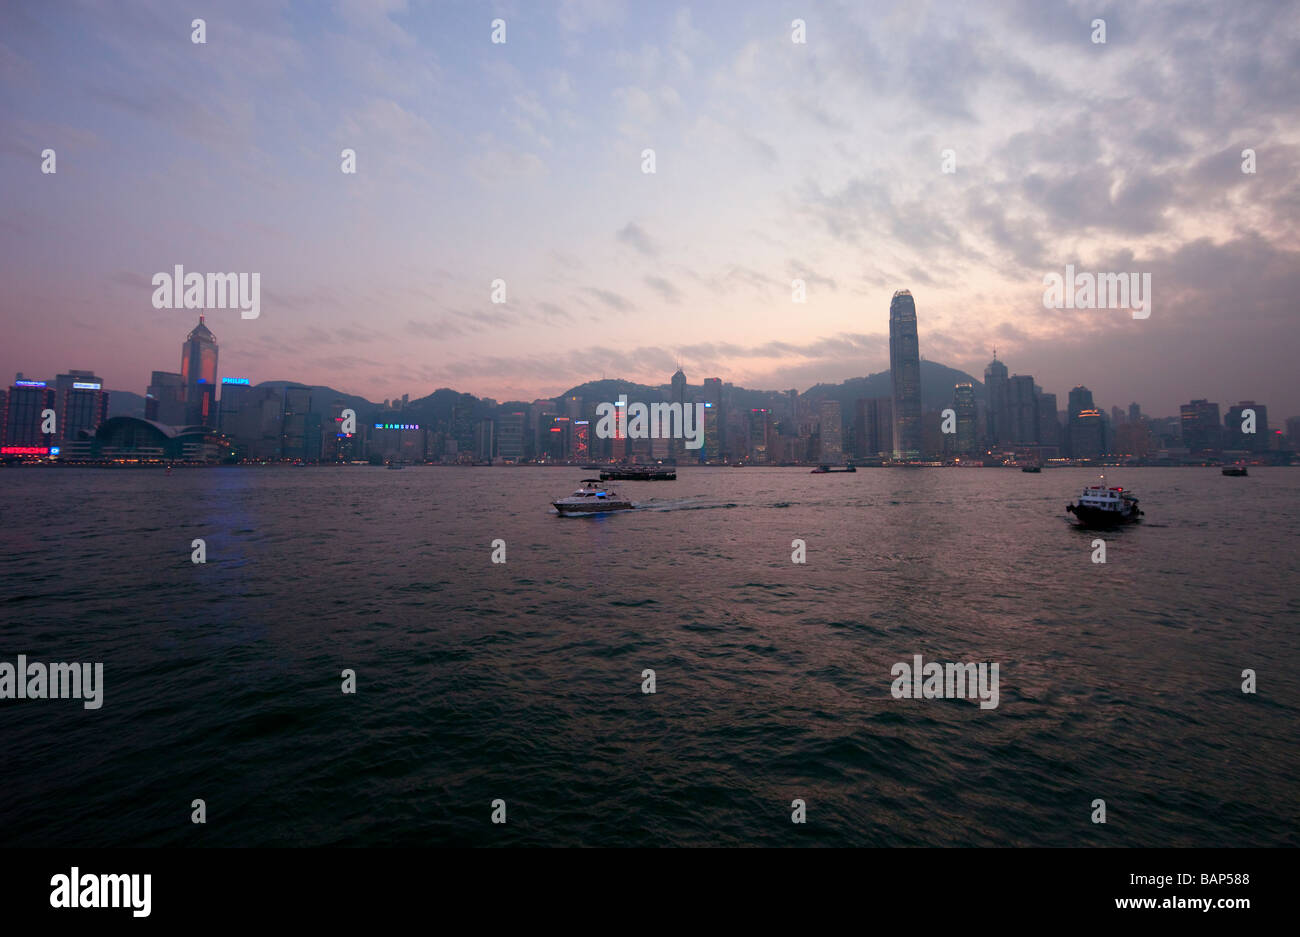 Skyline of Hong Kong at Dusk - Central Plaza and Two IFC on Hong Kong Island, China, Asia Stock Photo